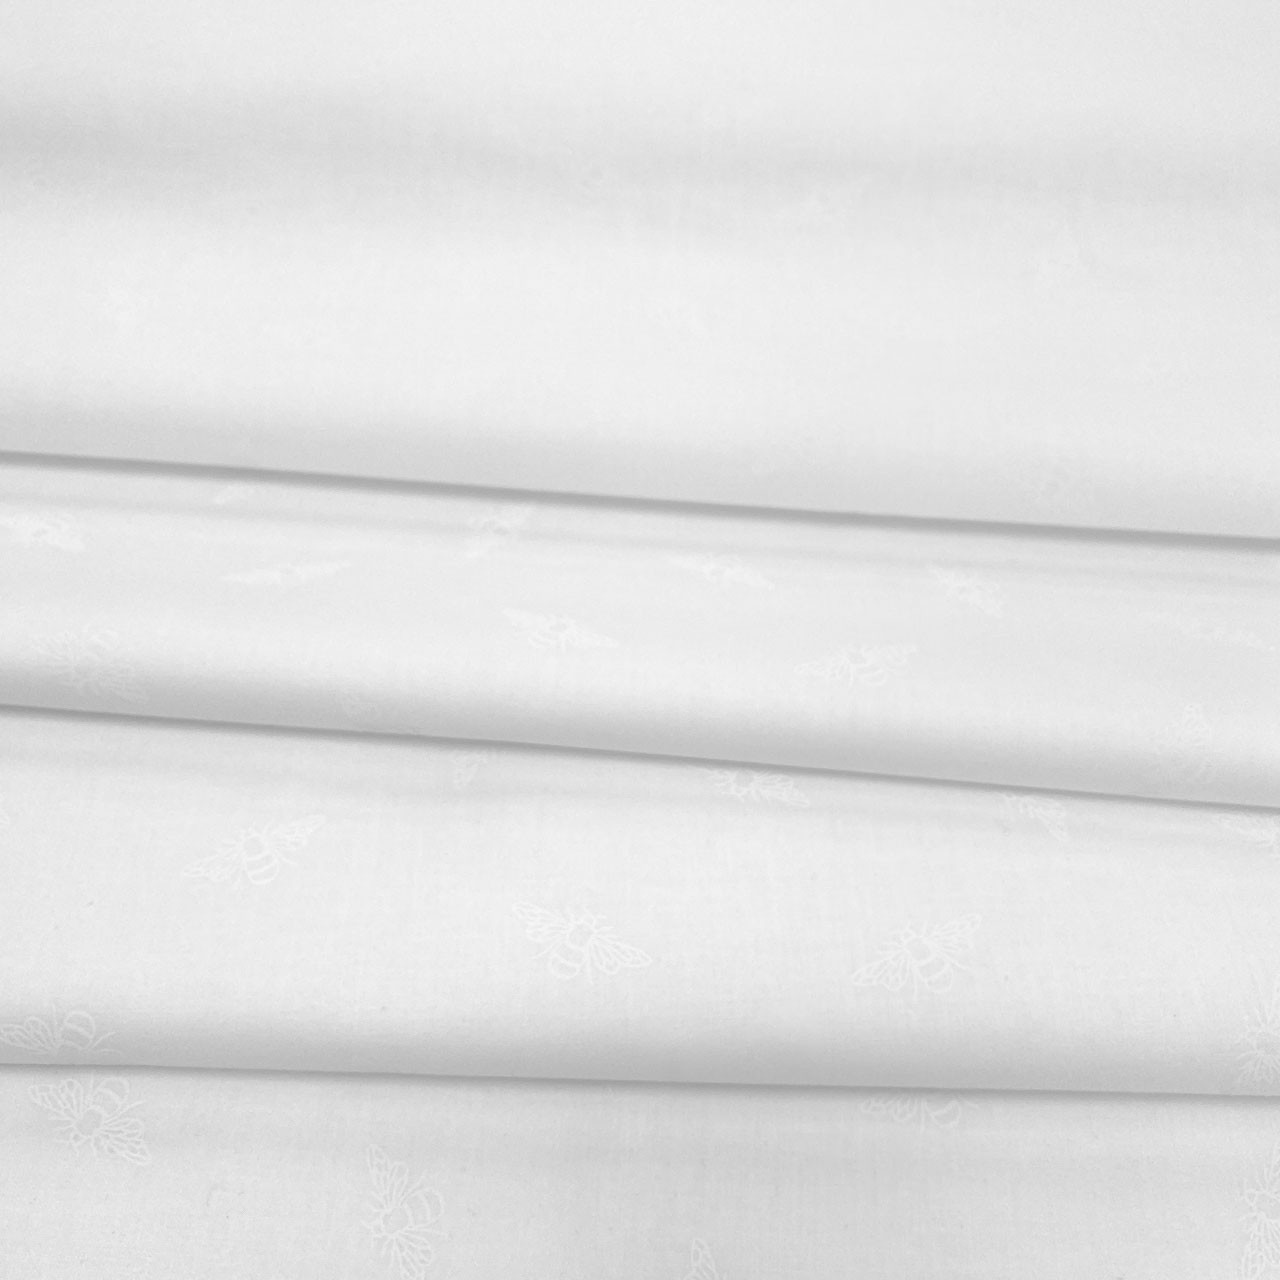 Fabric sample: P&B Textiles' Ramblings Spring white on white Bees fabric